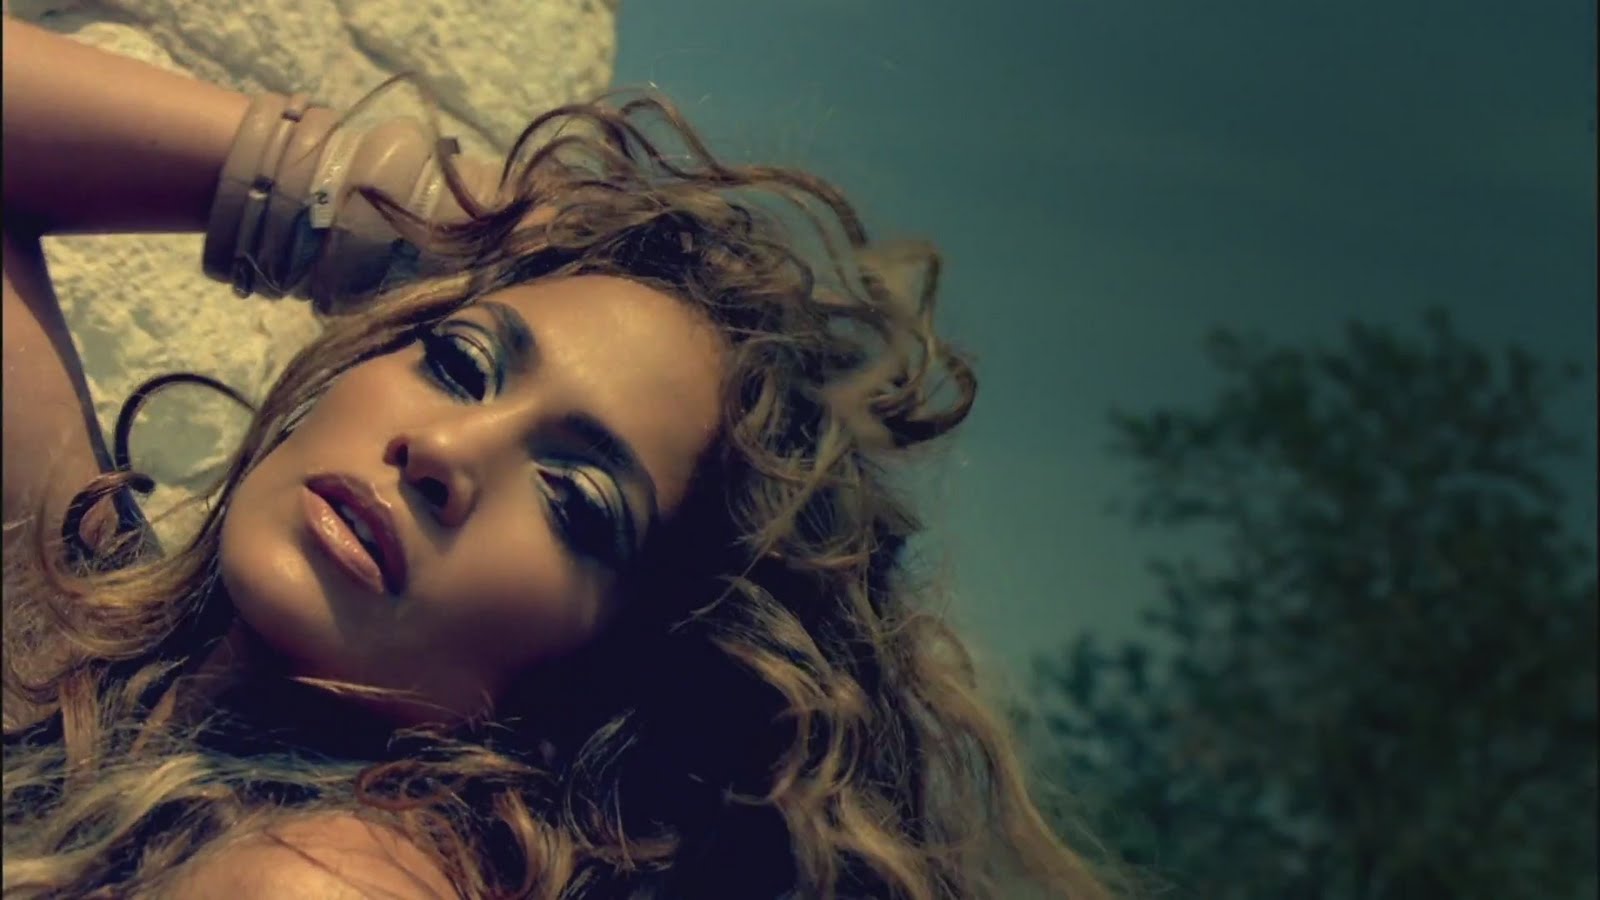 hiddenluxury: Jennifer Lopez "I'm Into You" Music Video ...